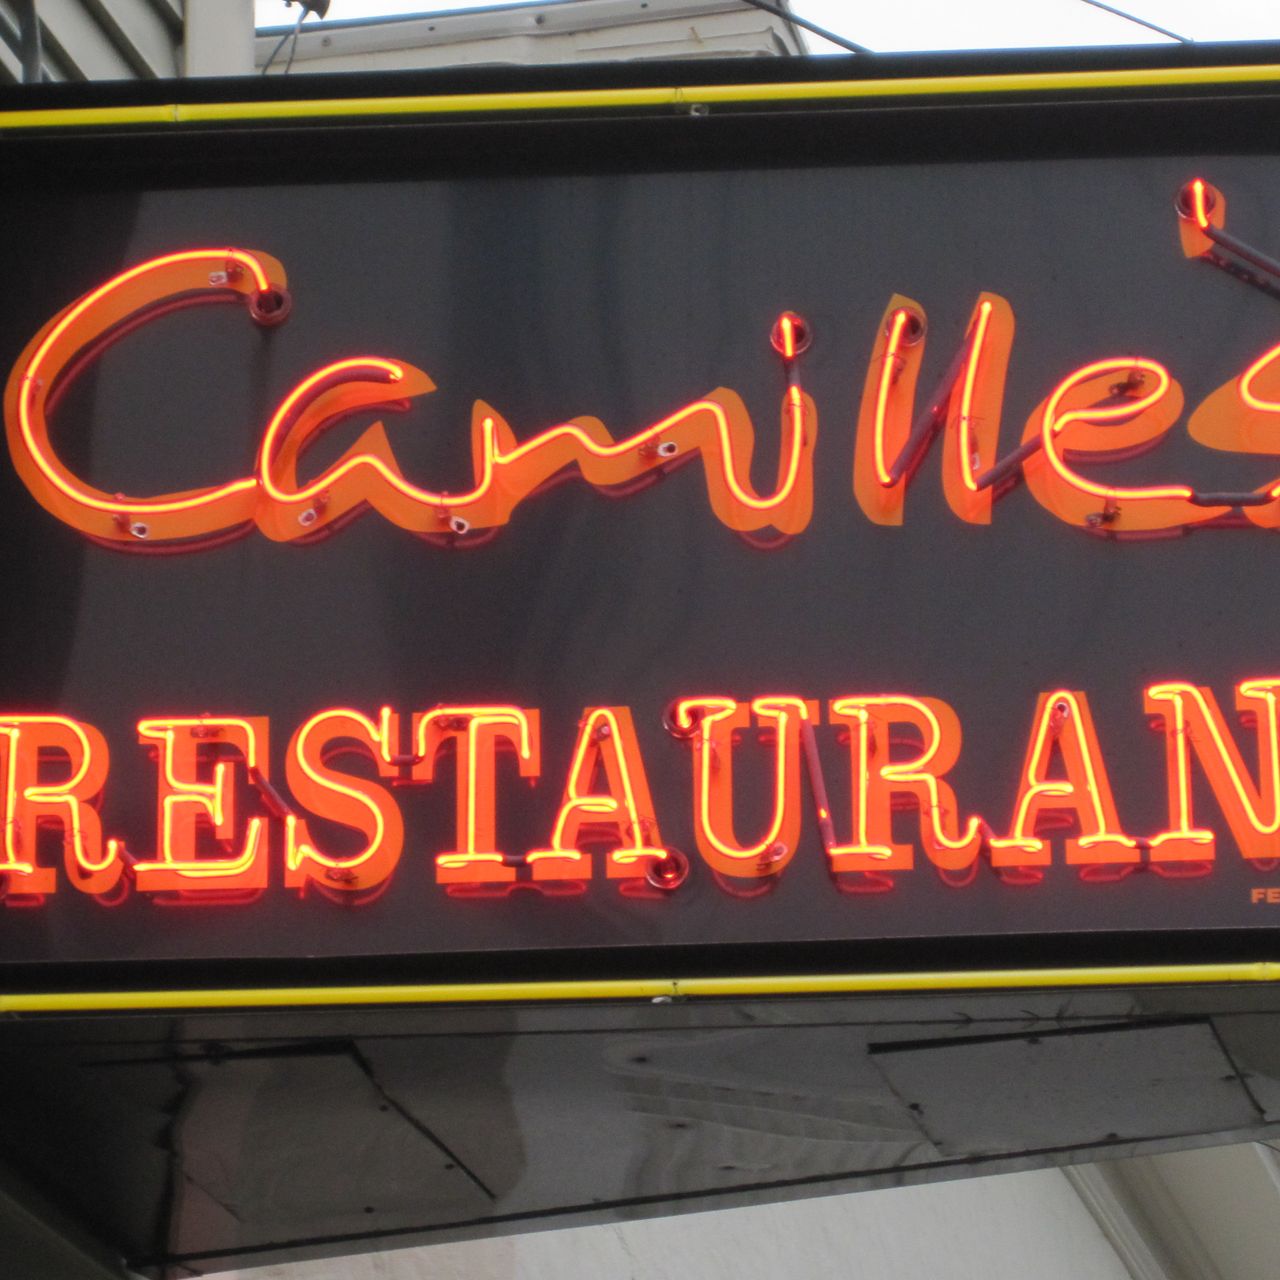 Camille's Restaurant Is The Oldest Italian Restaurant In Rhode Island